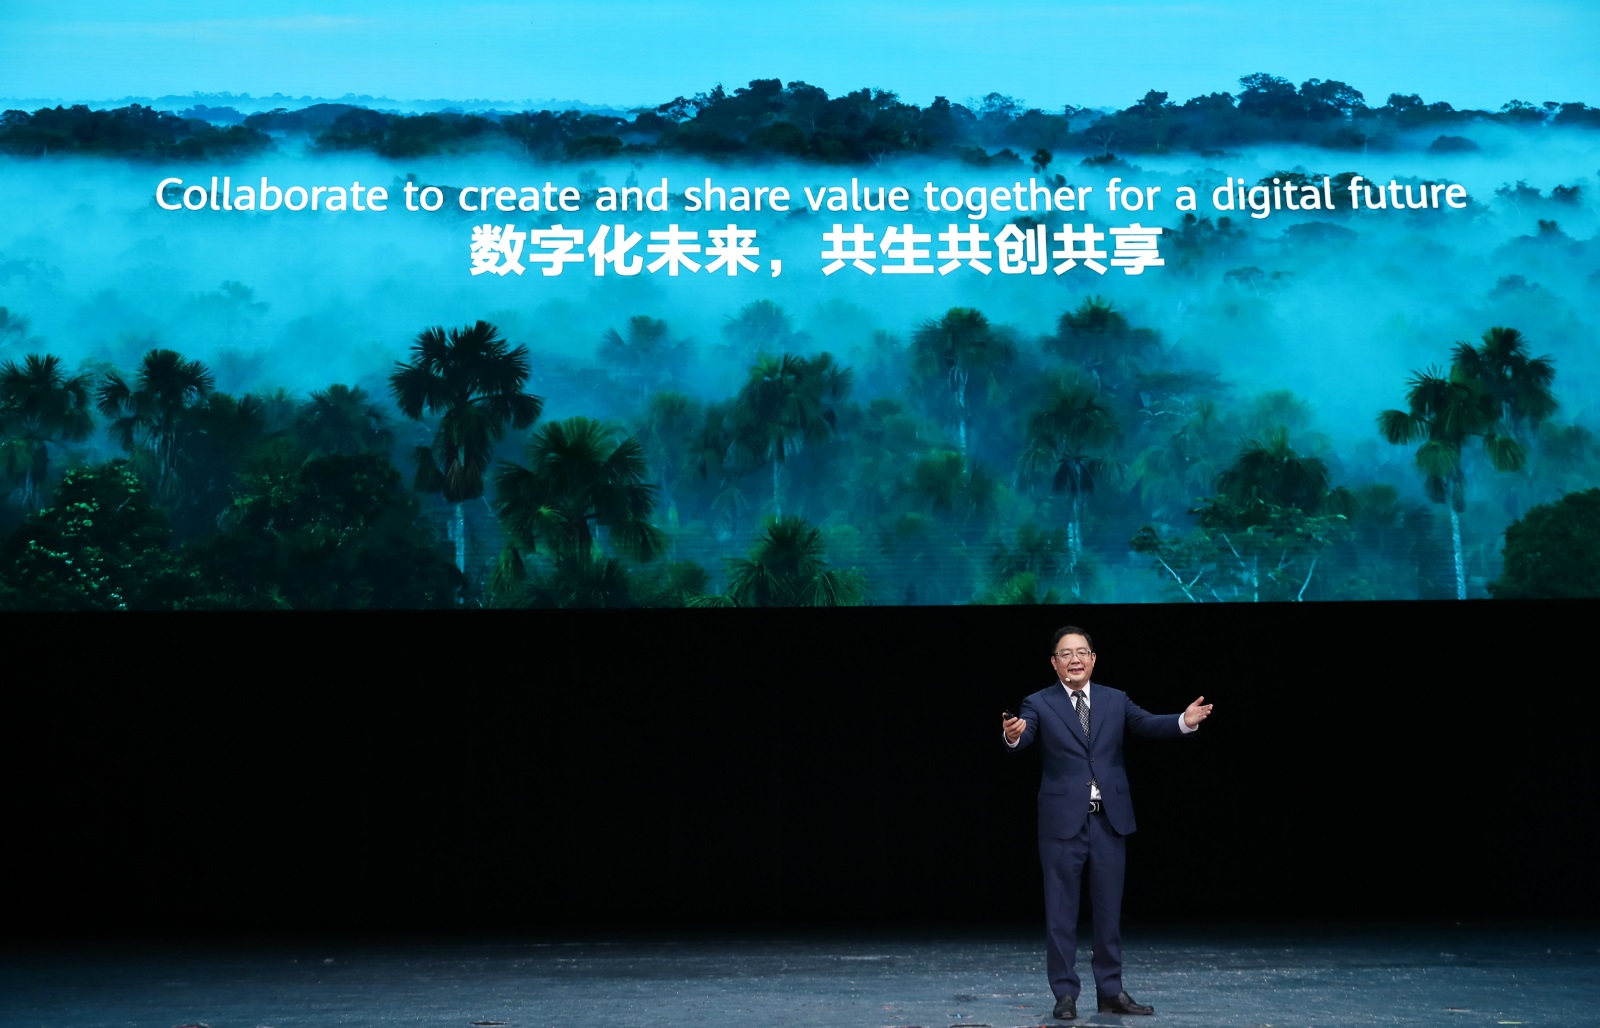 Peng Zhongyang, President of Huawei Enterprise BG, delivers his keynote speech at HUAWEI CONNECT 2020